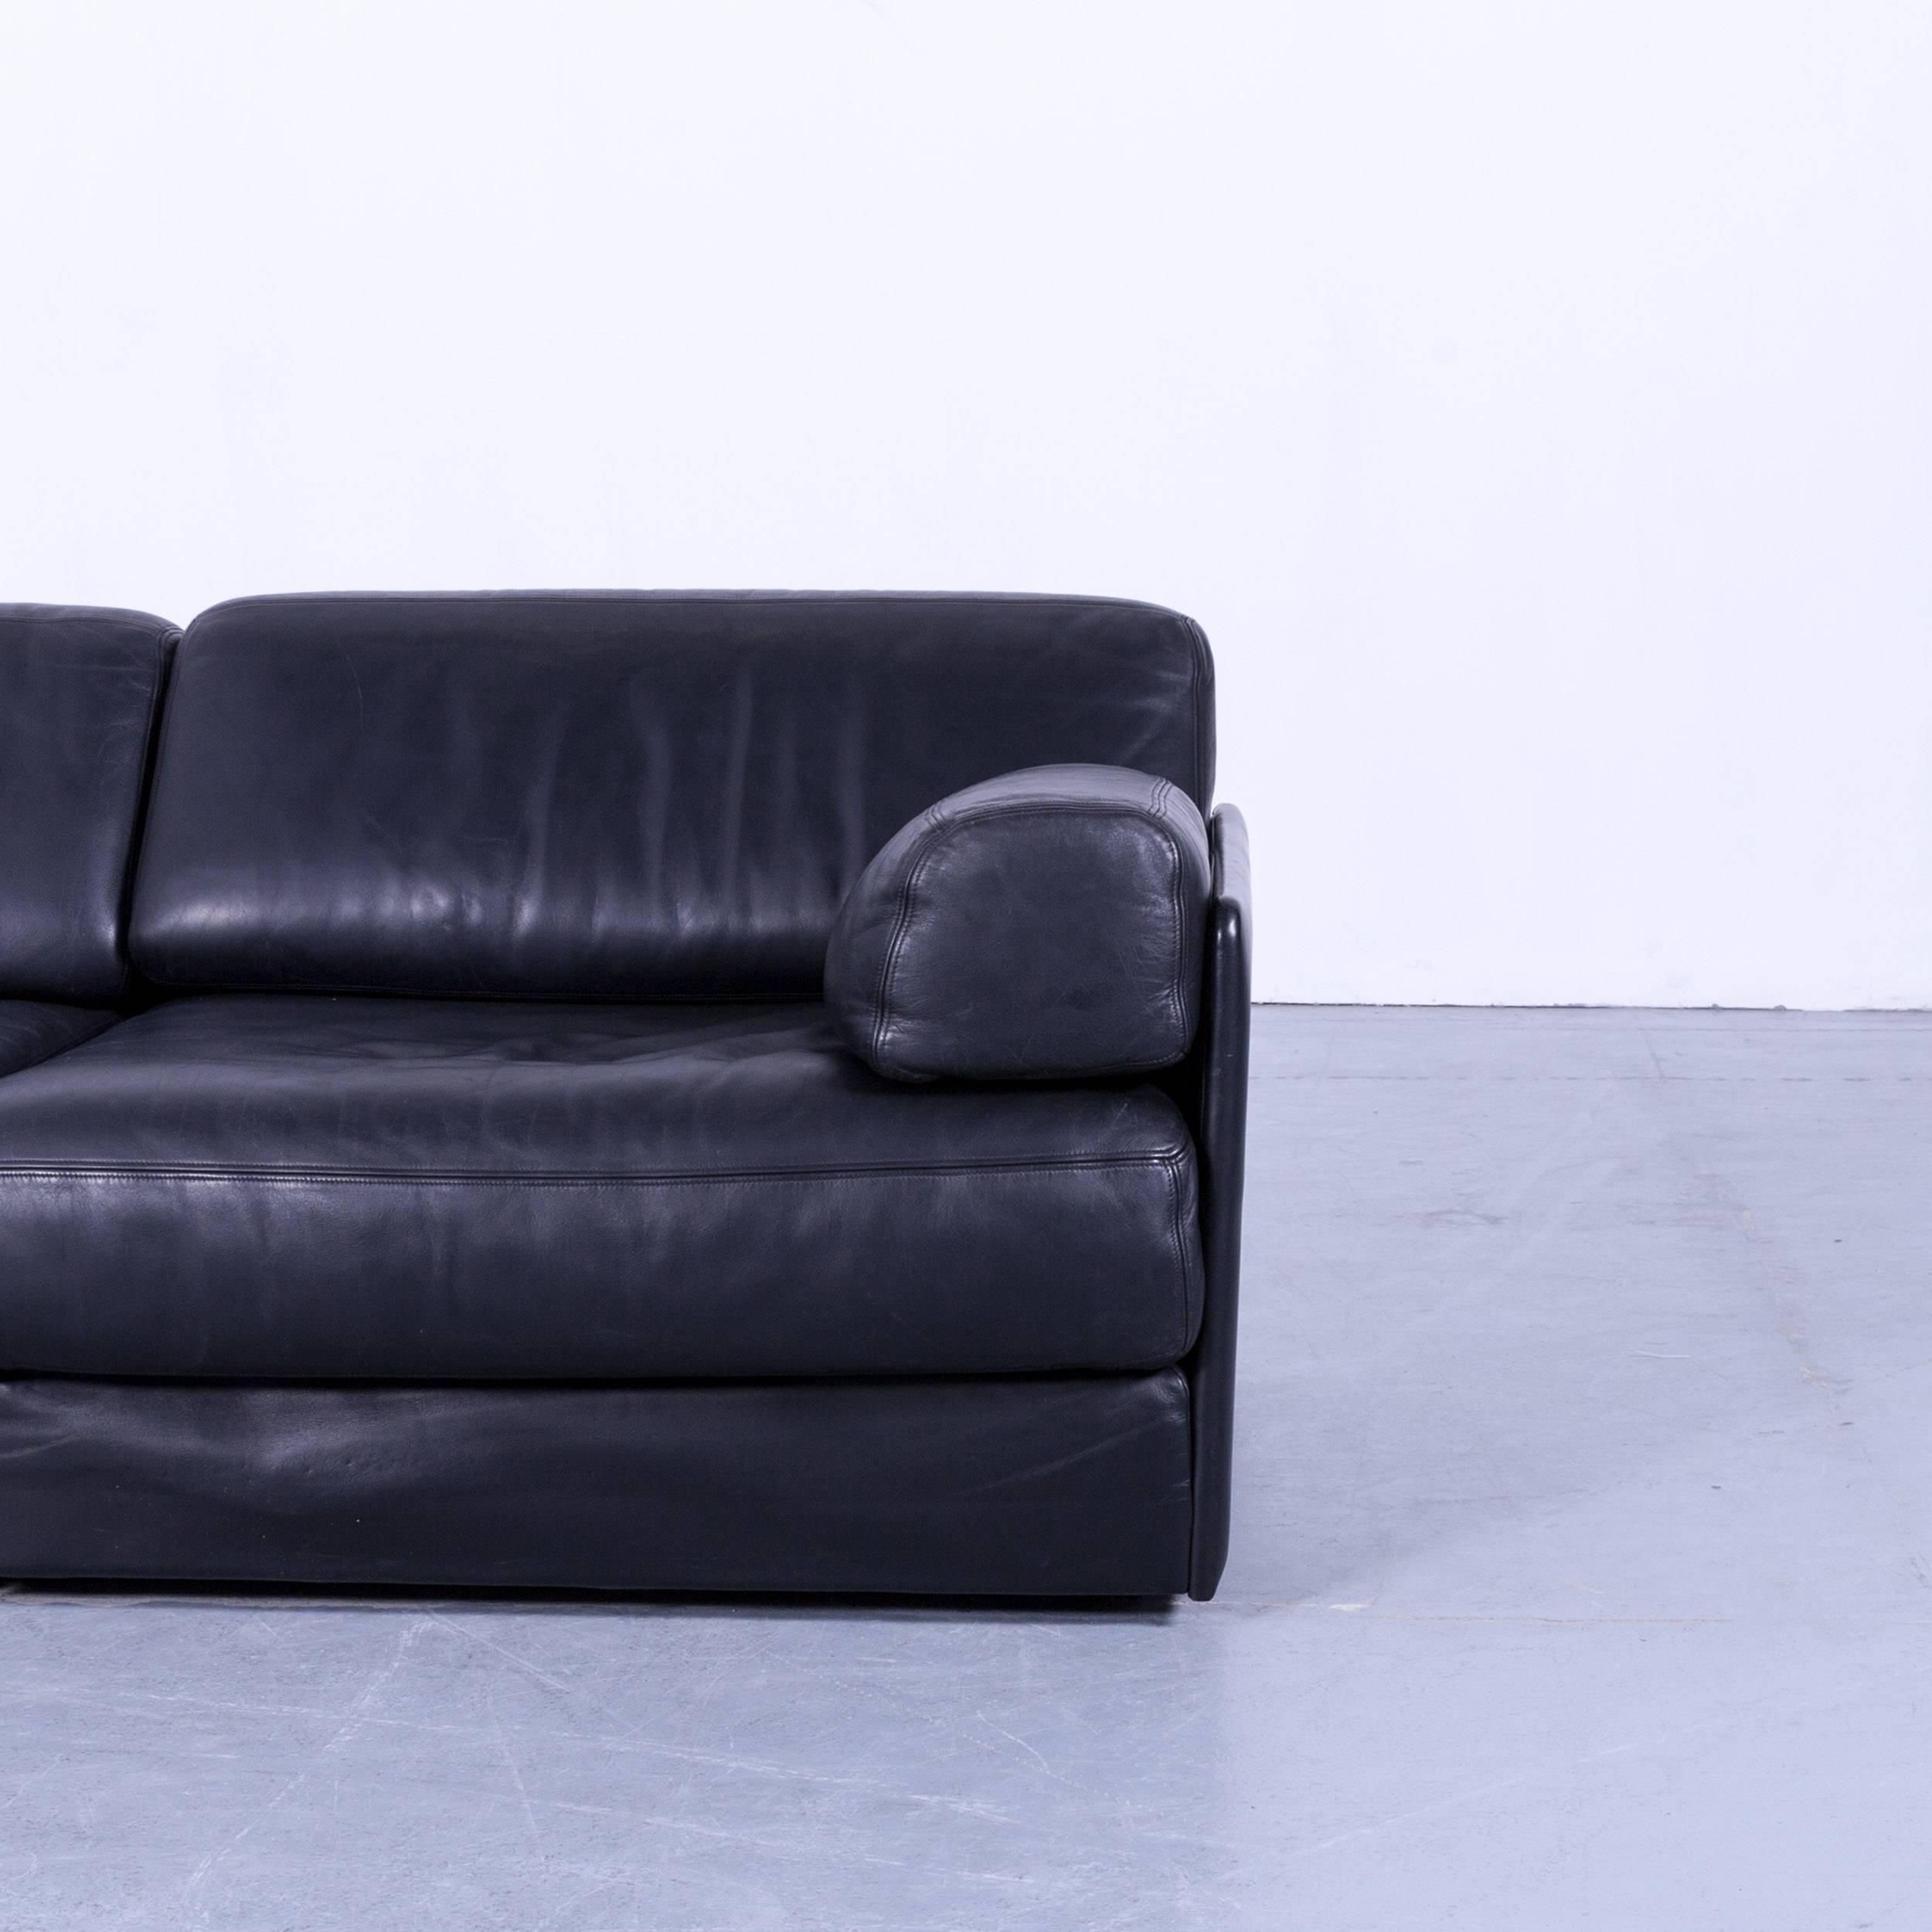 Swiss De Sede DS 76 Designer Corner Sofa Black Leather Sleeping Function Bed